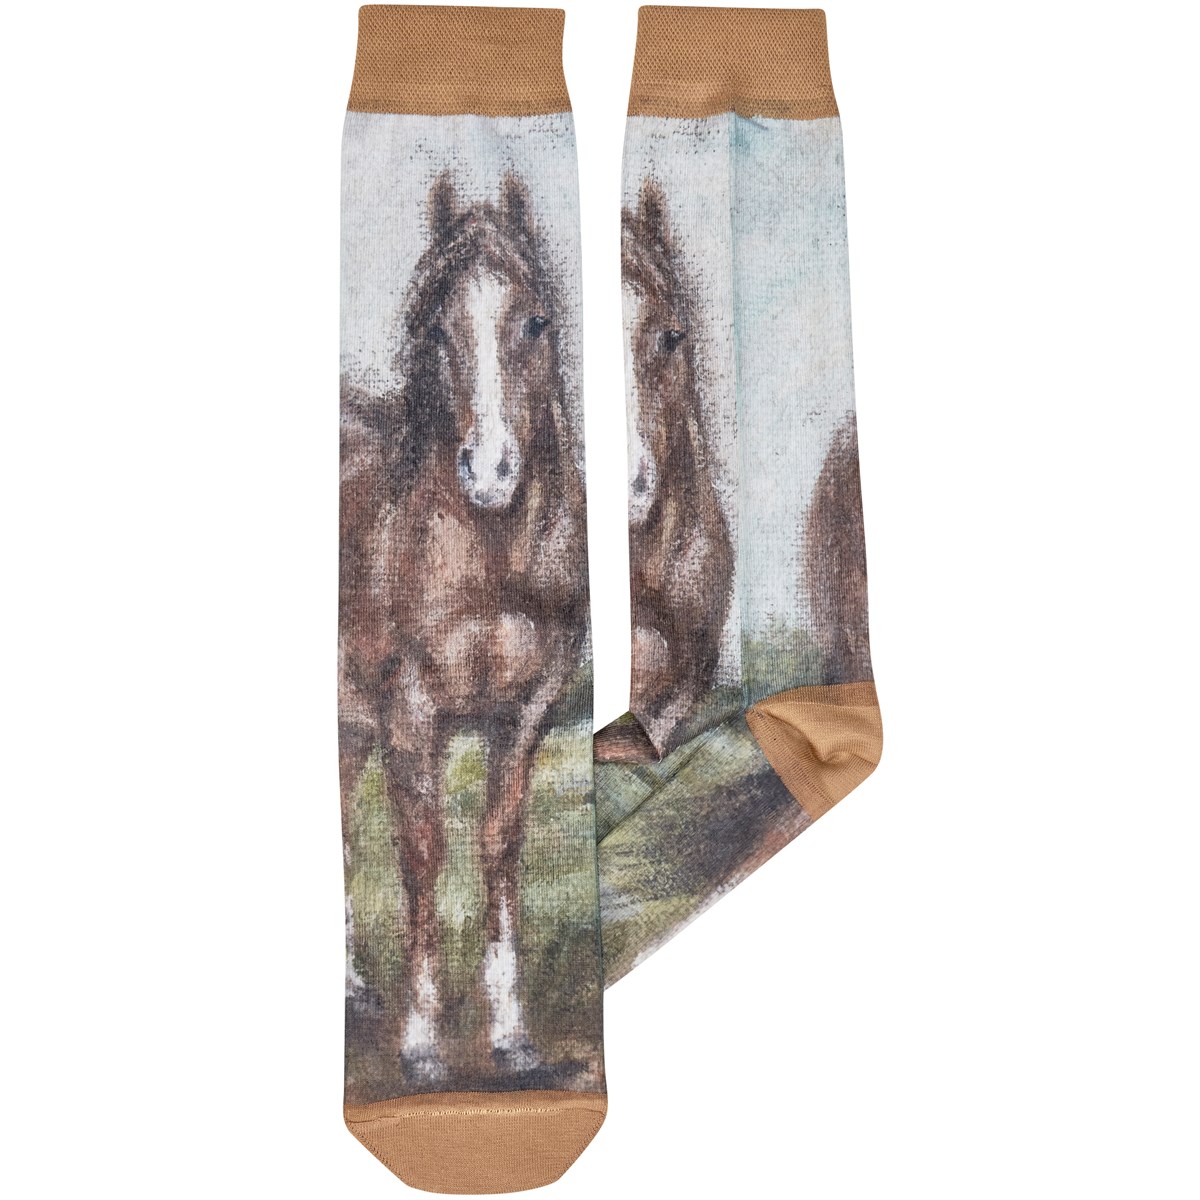 Horse Socks - Polyester, Spandex